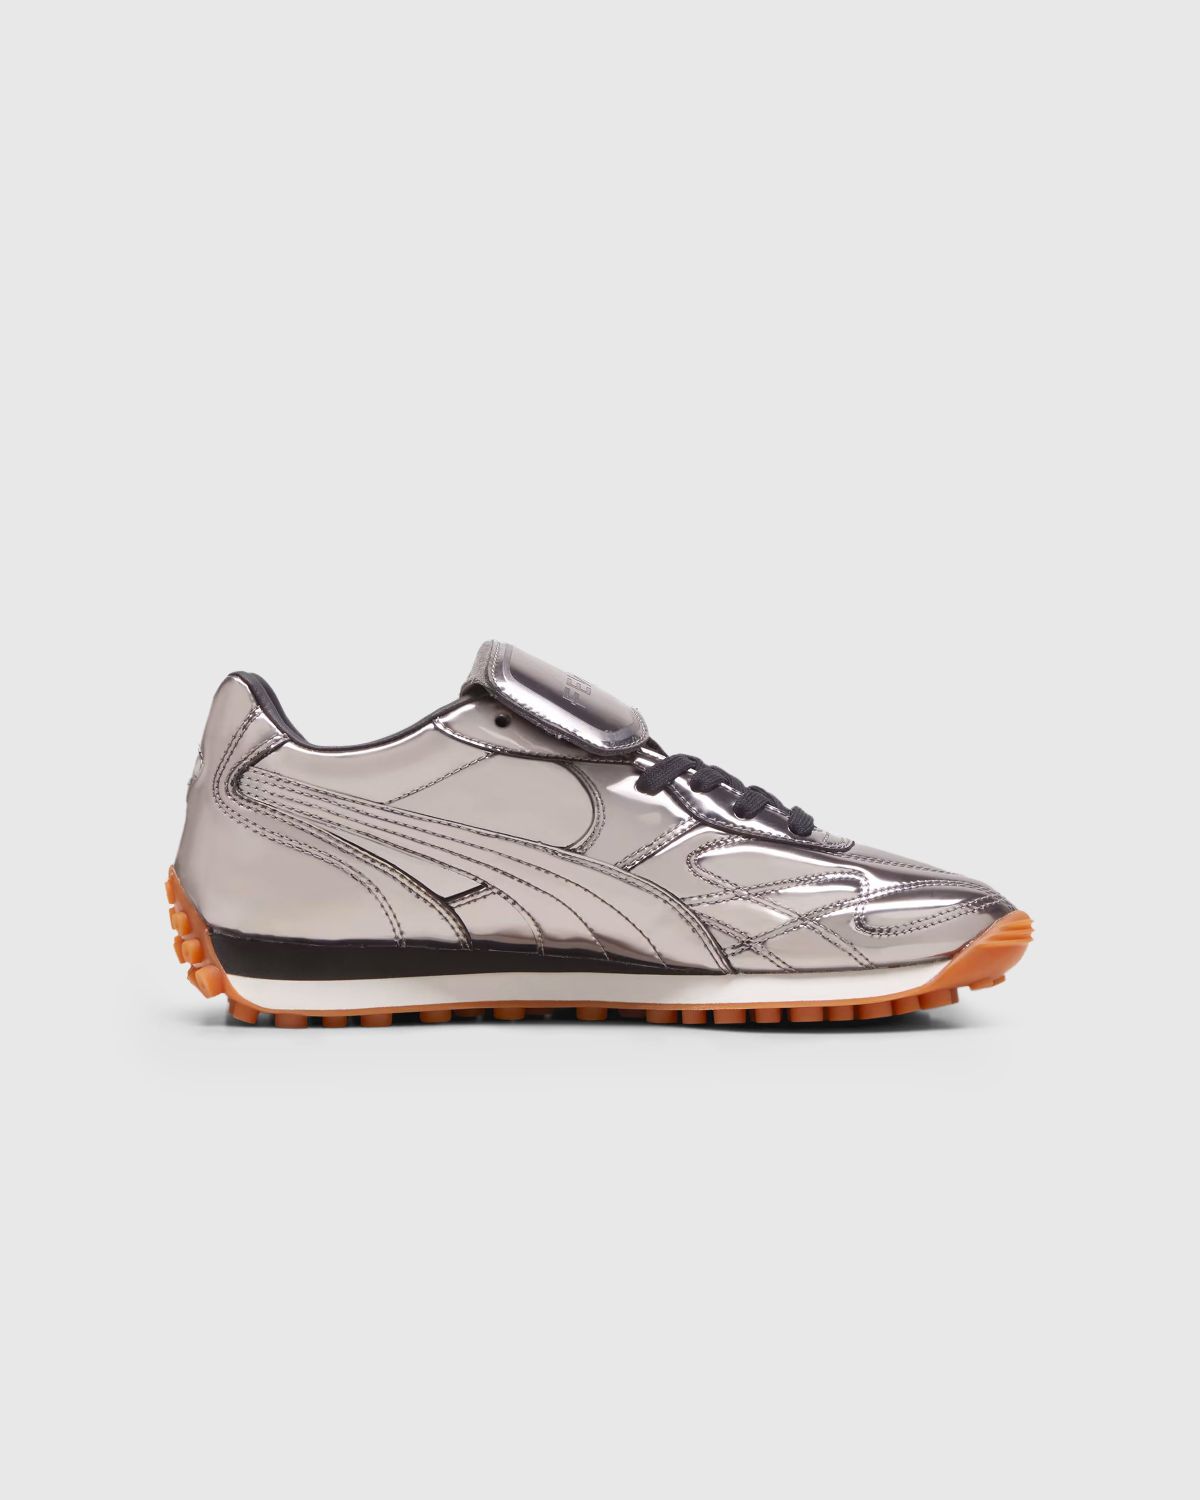 Fenty x Puma – Avanti C Aged Silver - Sneakers - Silver - Image 1